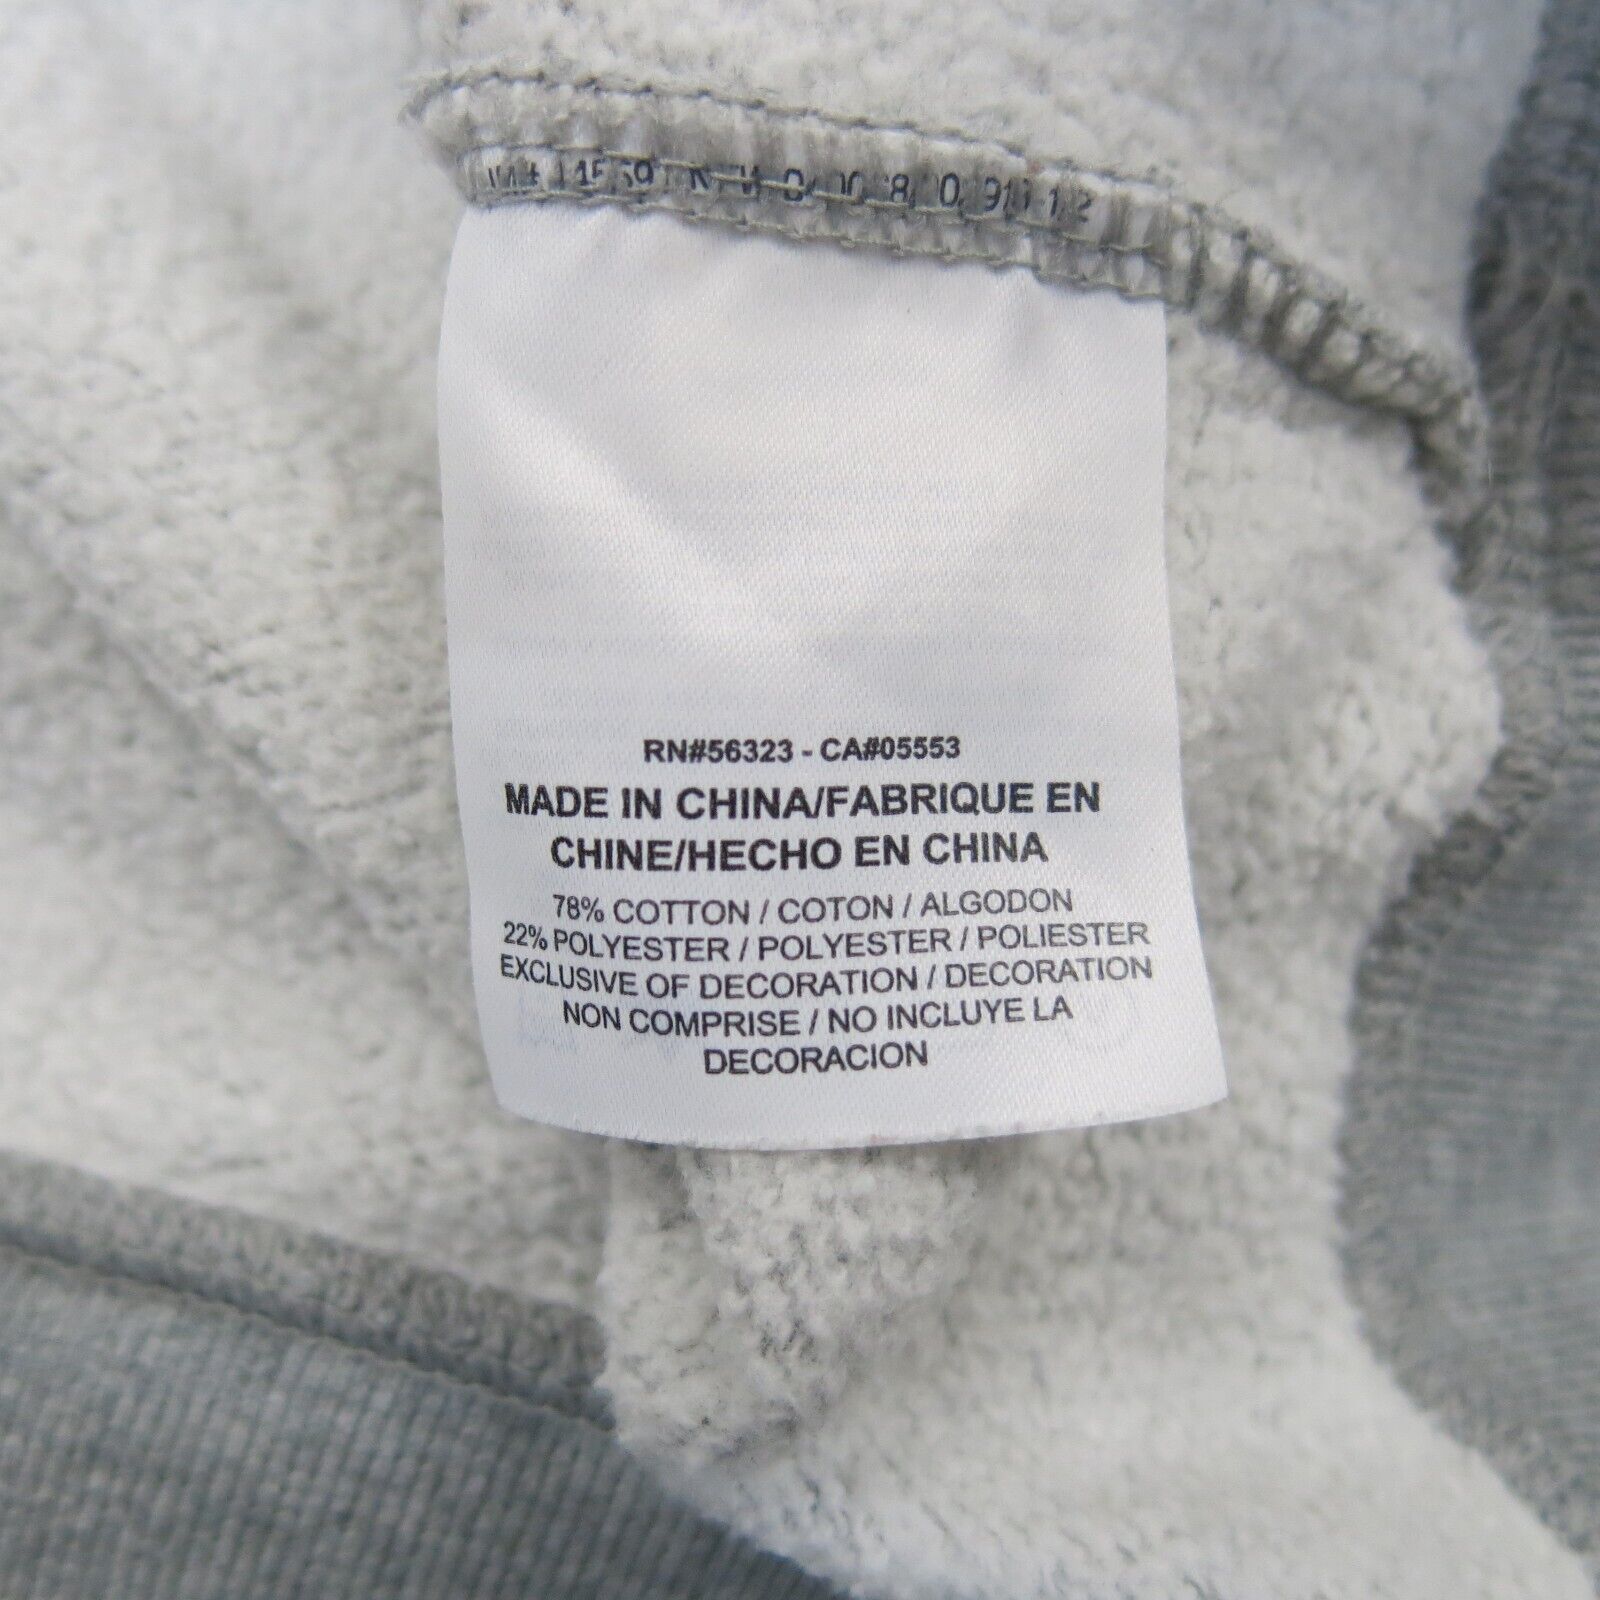 Brand - Symbol Men's Cotton Blend Crew Neck Sweatshirt